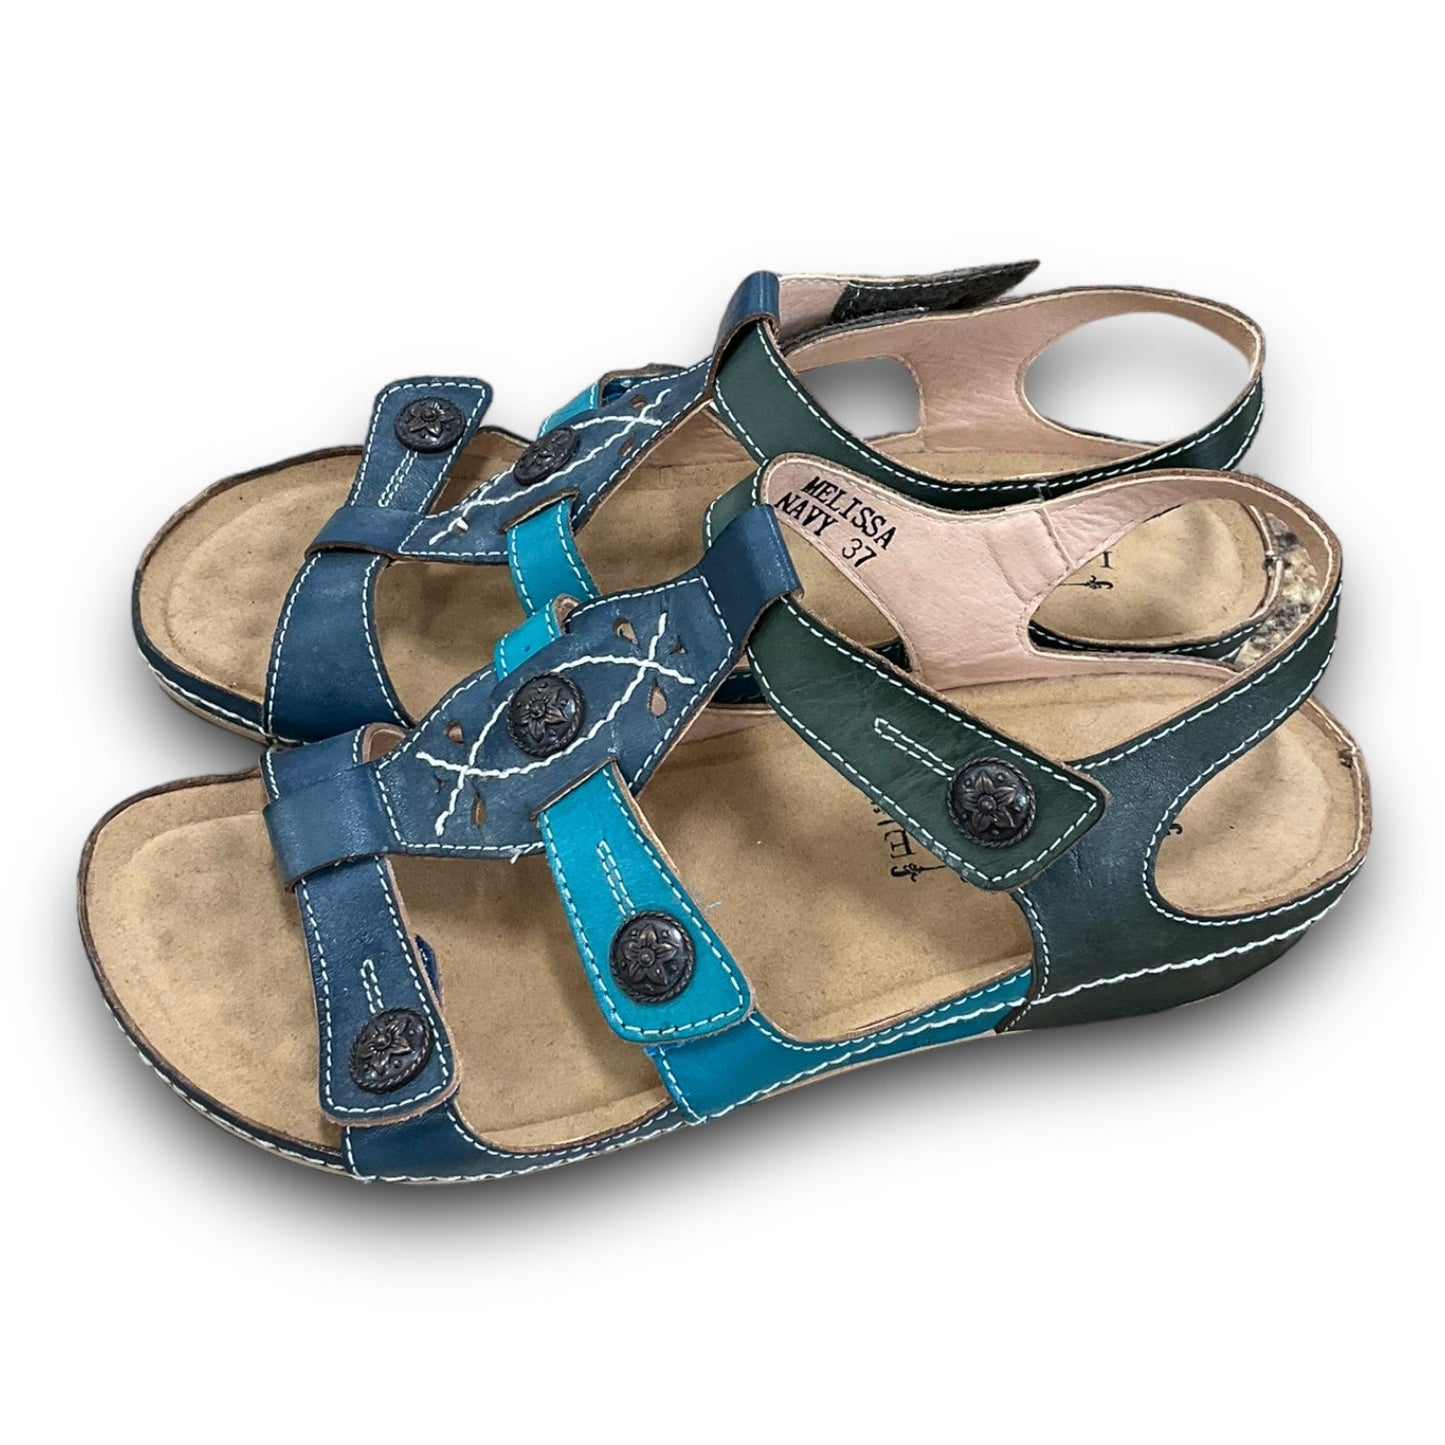 Blue & Green Sandals Flats Spring Step, Size 6.5